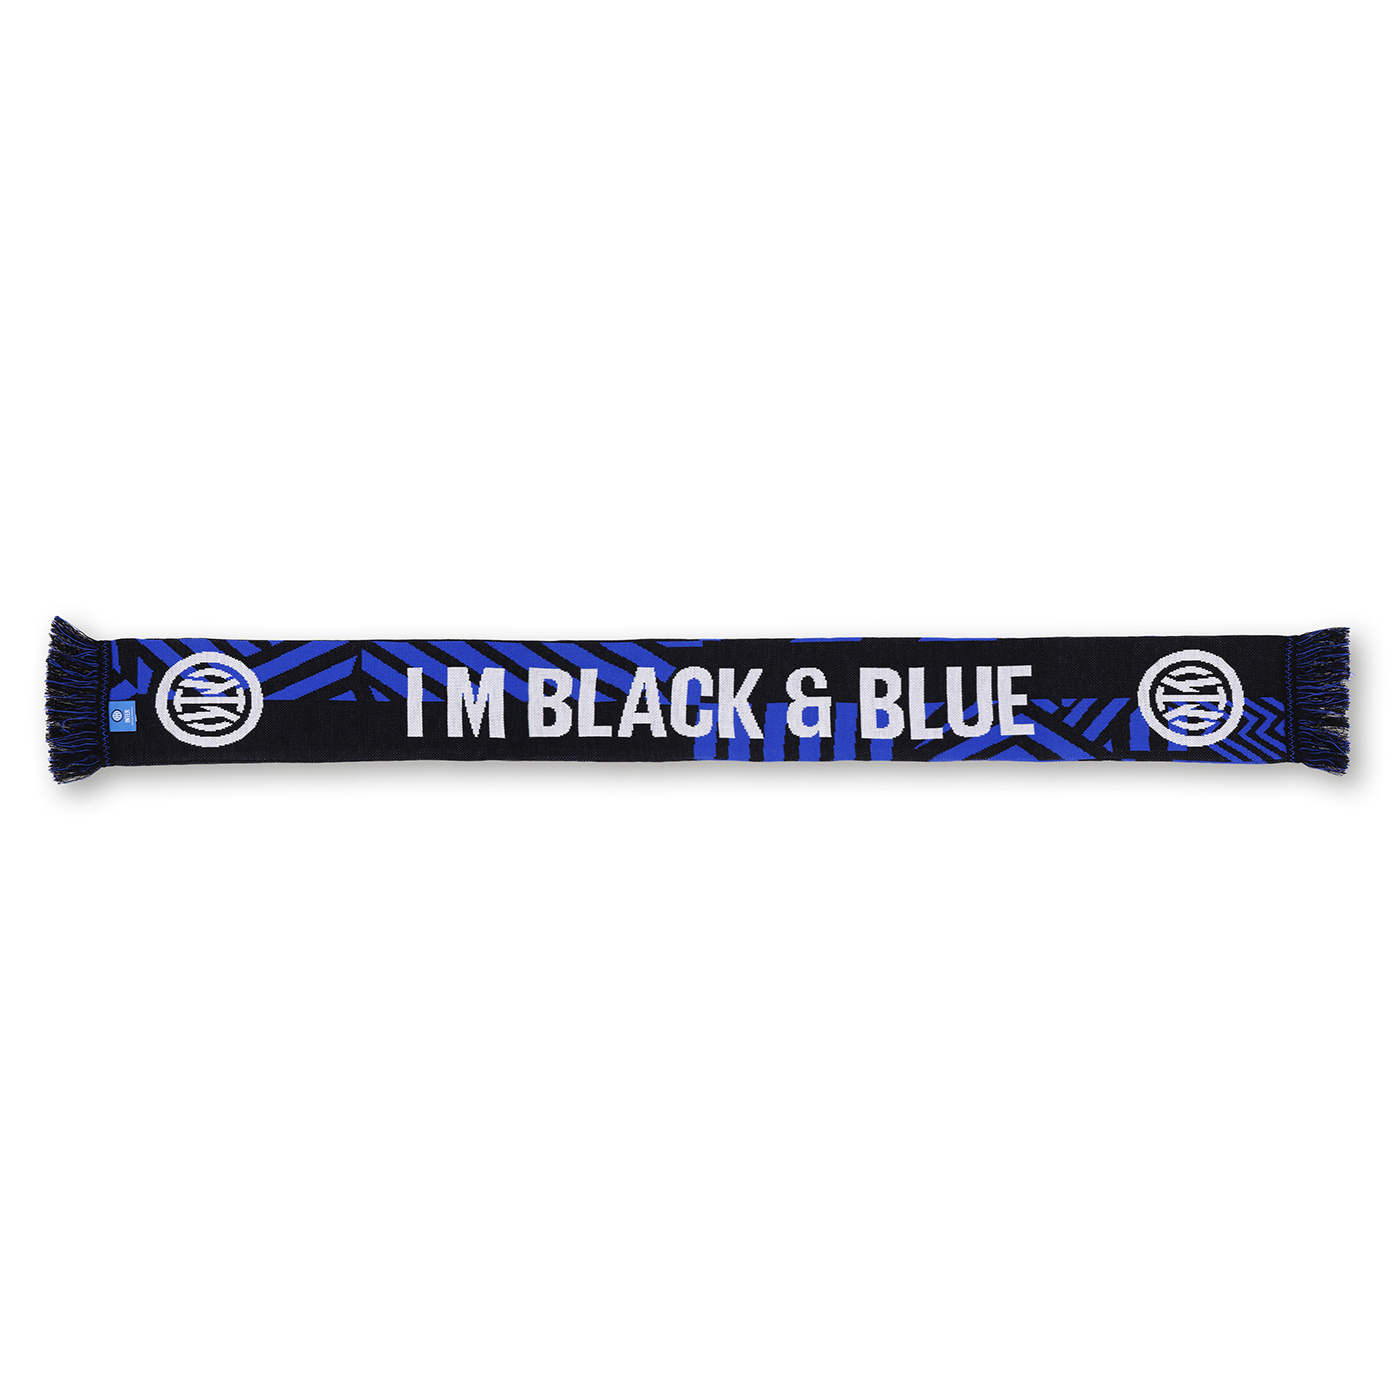 Image IM BLACK & BLUE TWO-SIDED SCARF - 3 